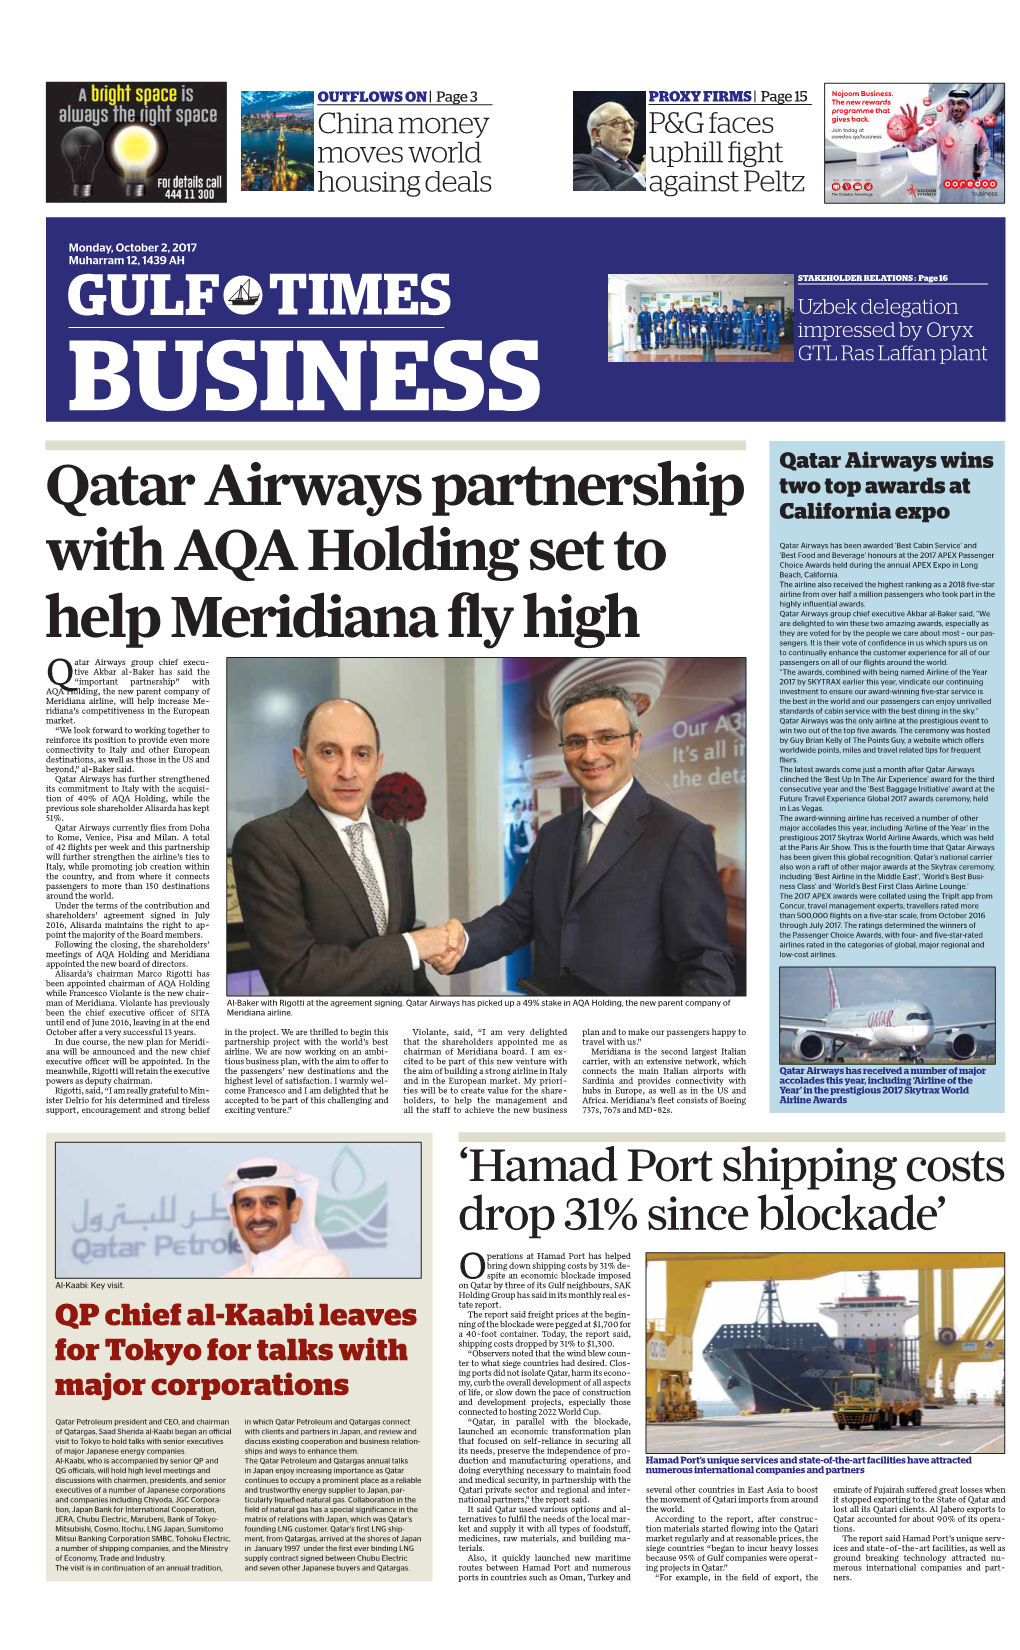 Qatar Airways Partnership with AQA Holding Set to Help Meridiana Fly High